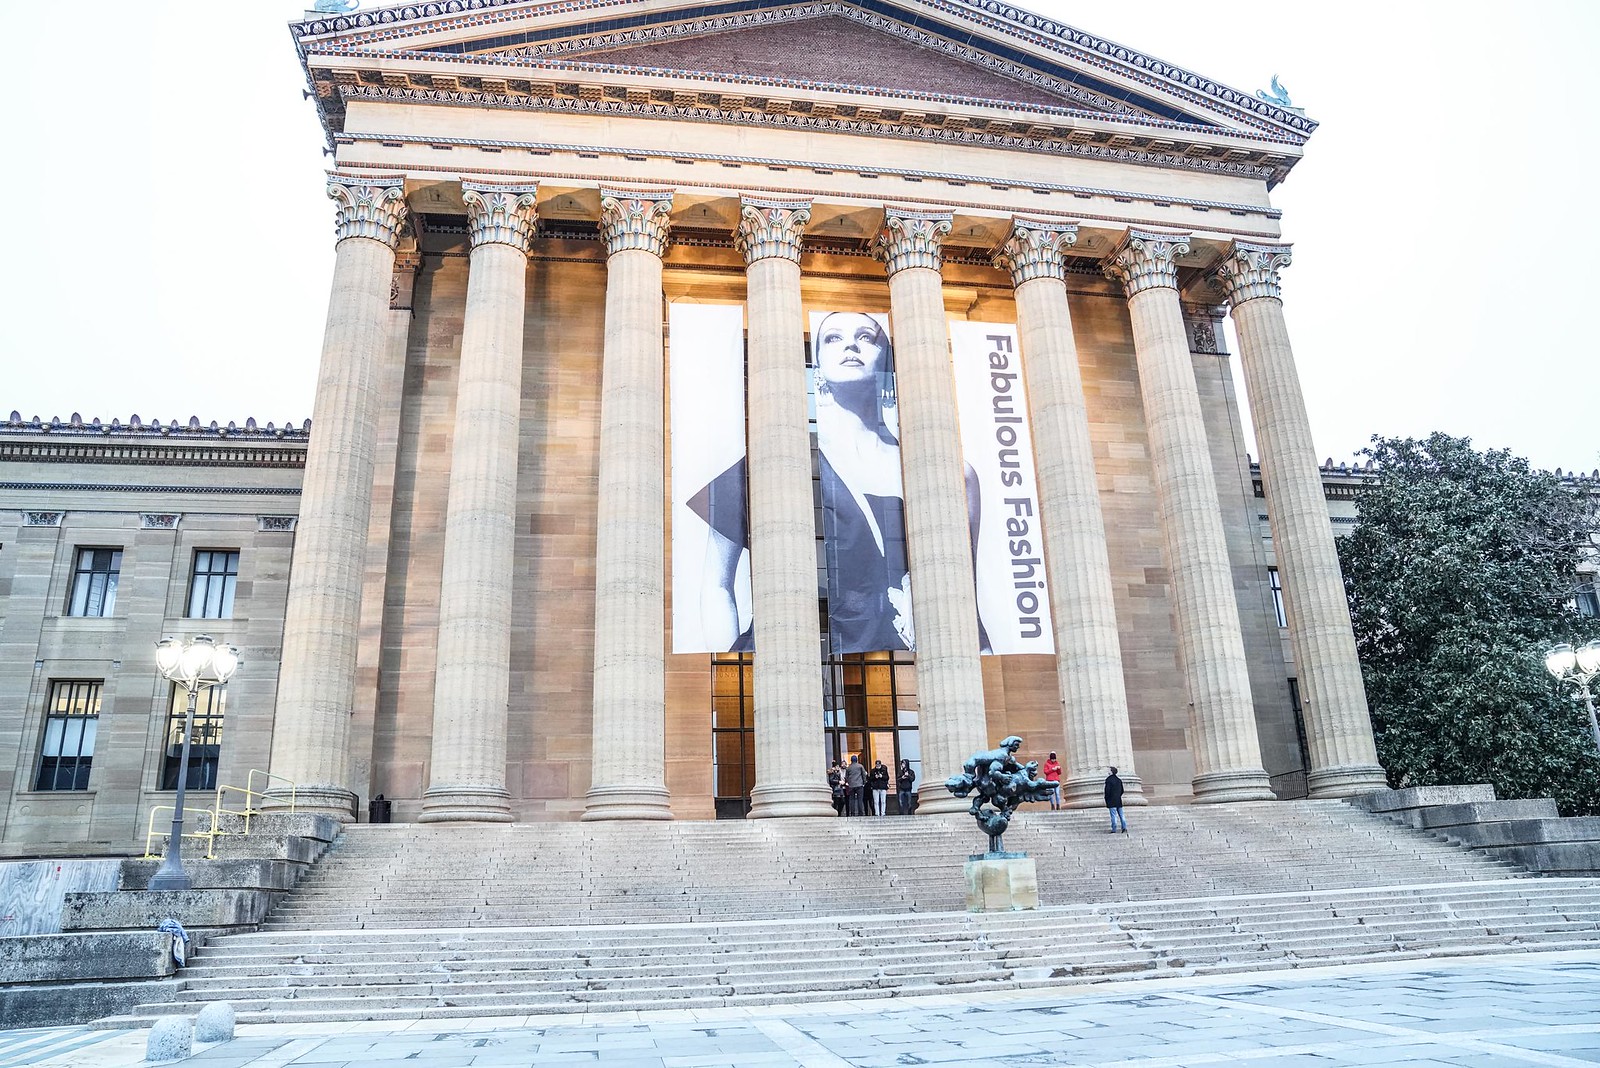 Philadelphia Museum of Art